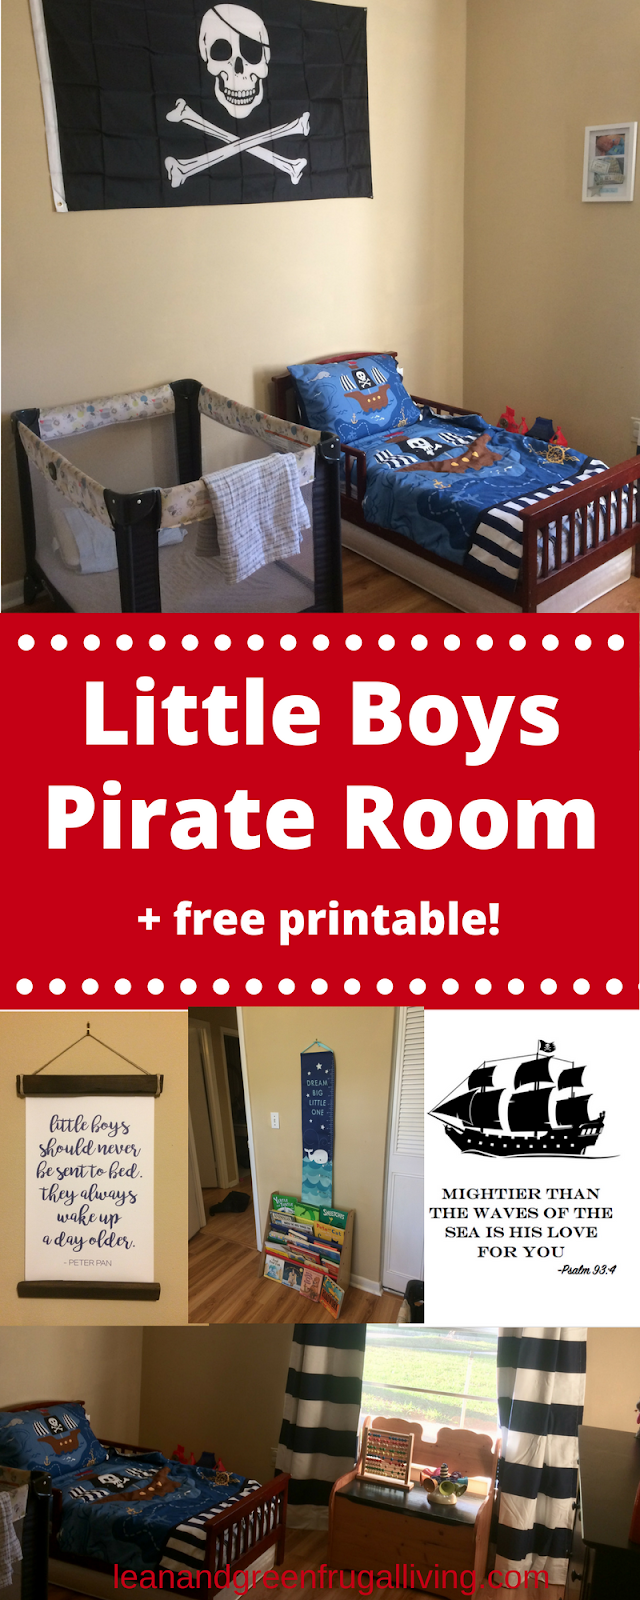 Boys’ Pirate Room Reveal! + FREE PRINTABLE